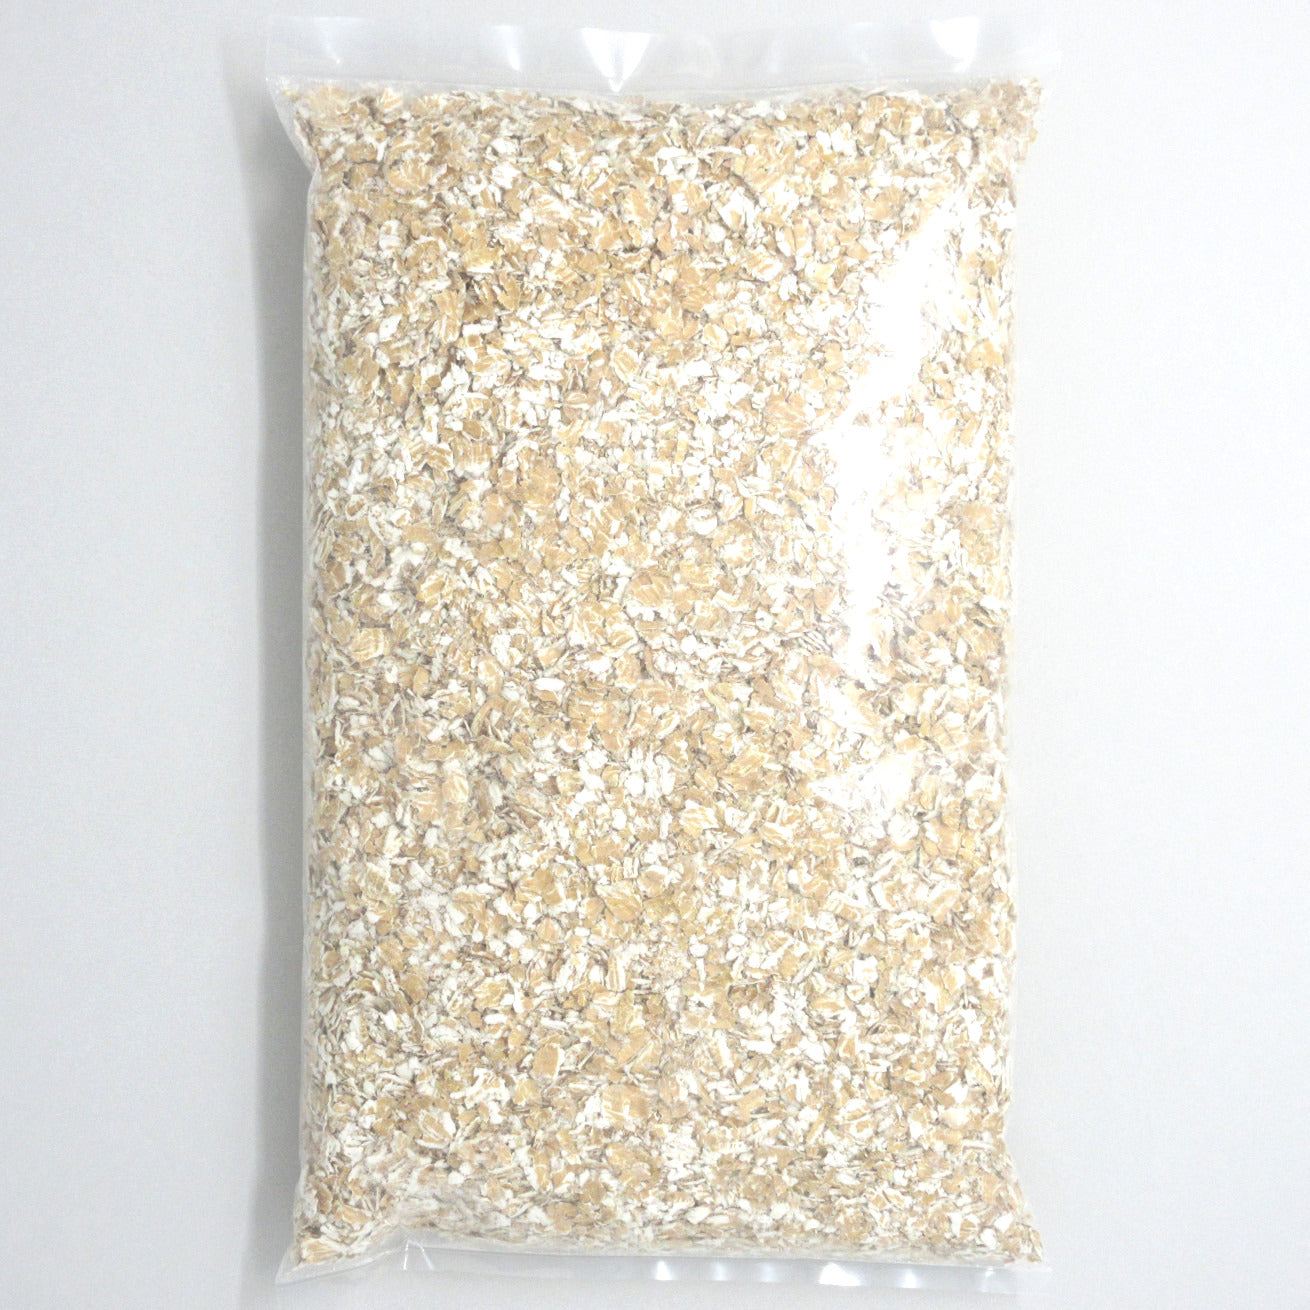 Flour Barrel product image - Spelt Flakes